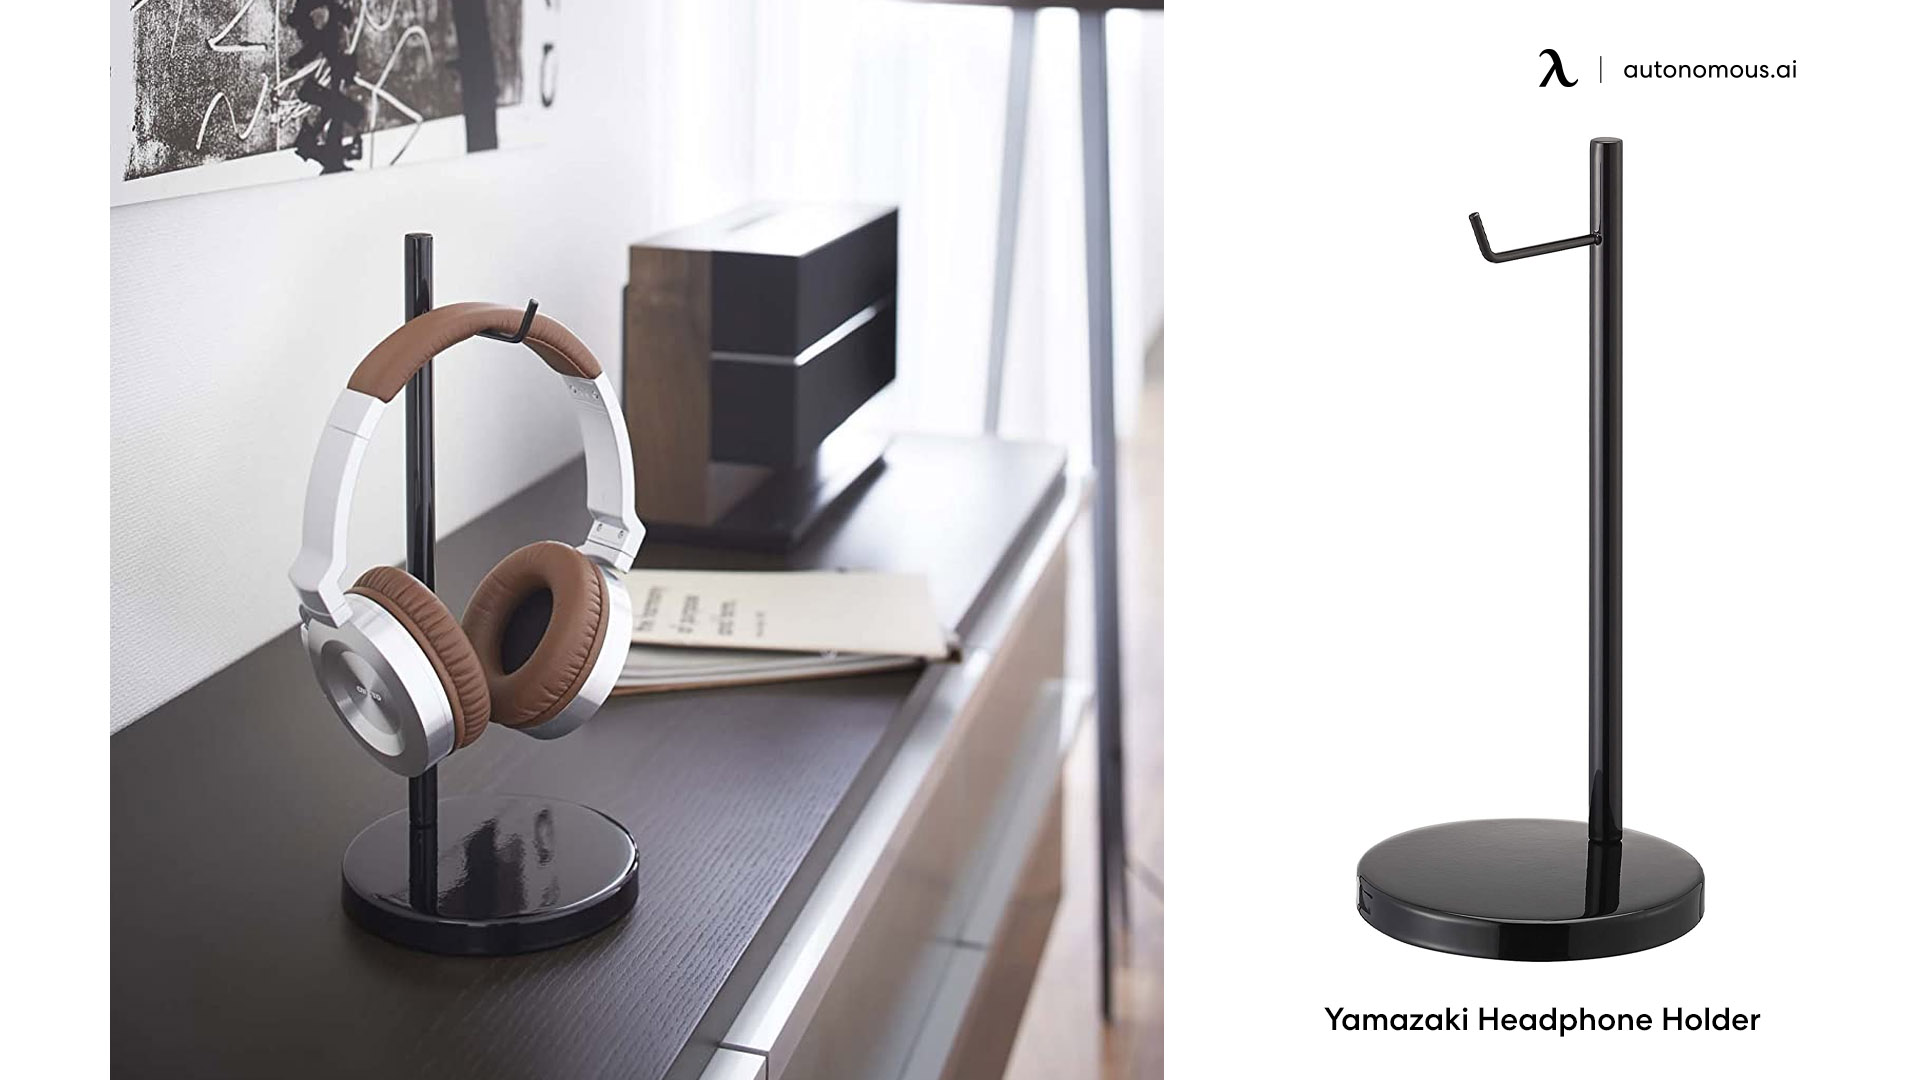 Yamazaki Headphone Holder work from home desk accessories